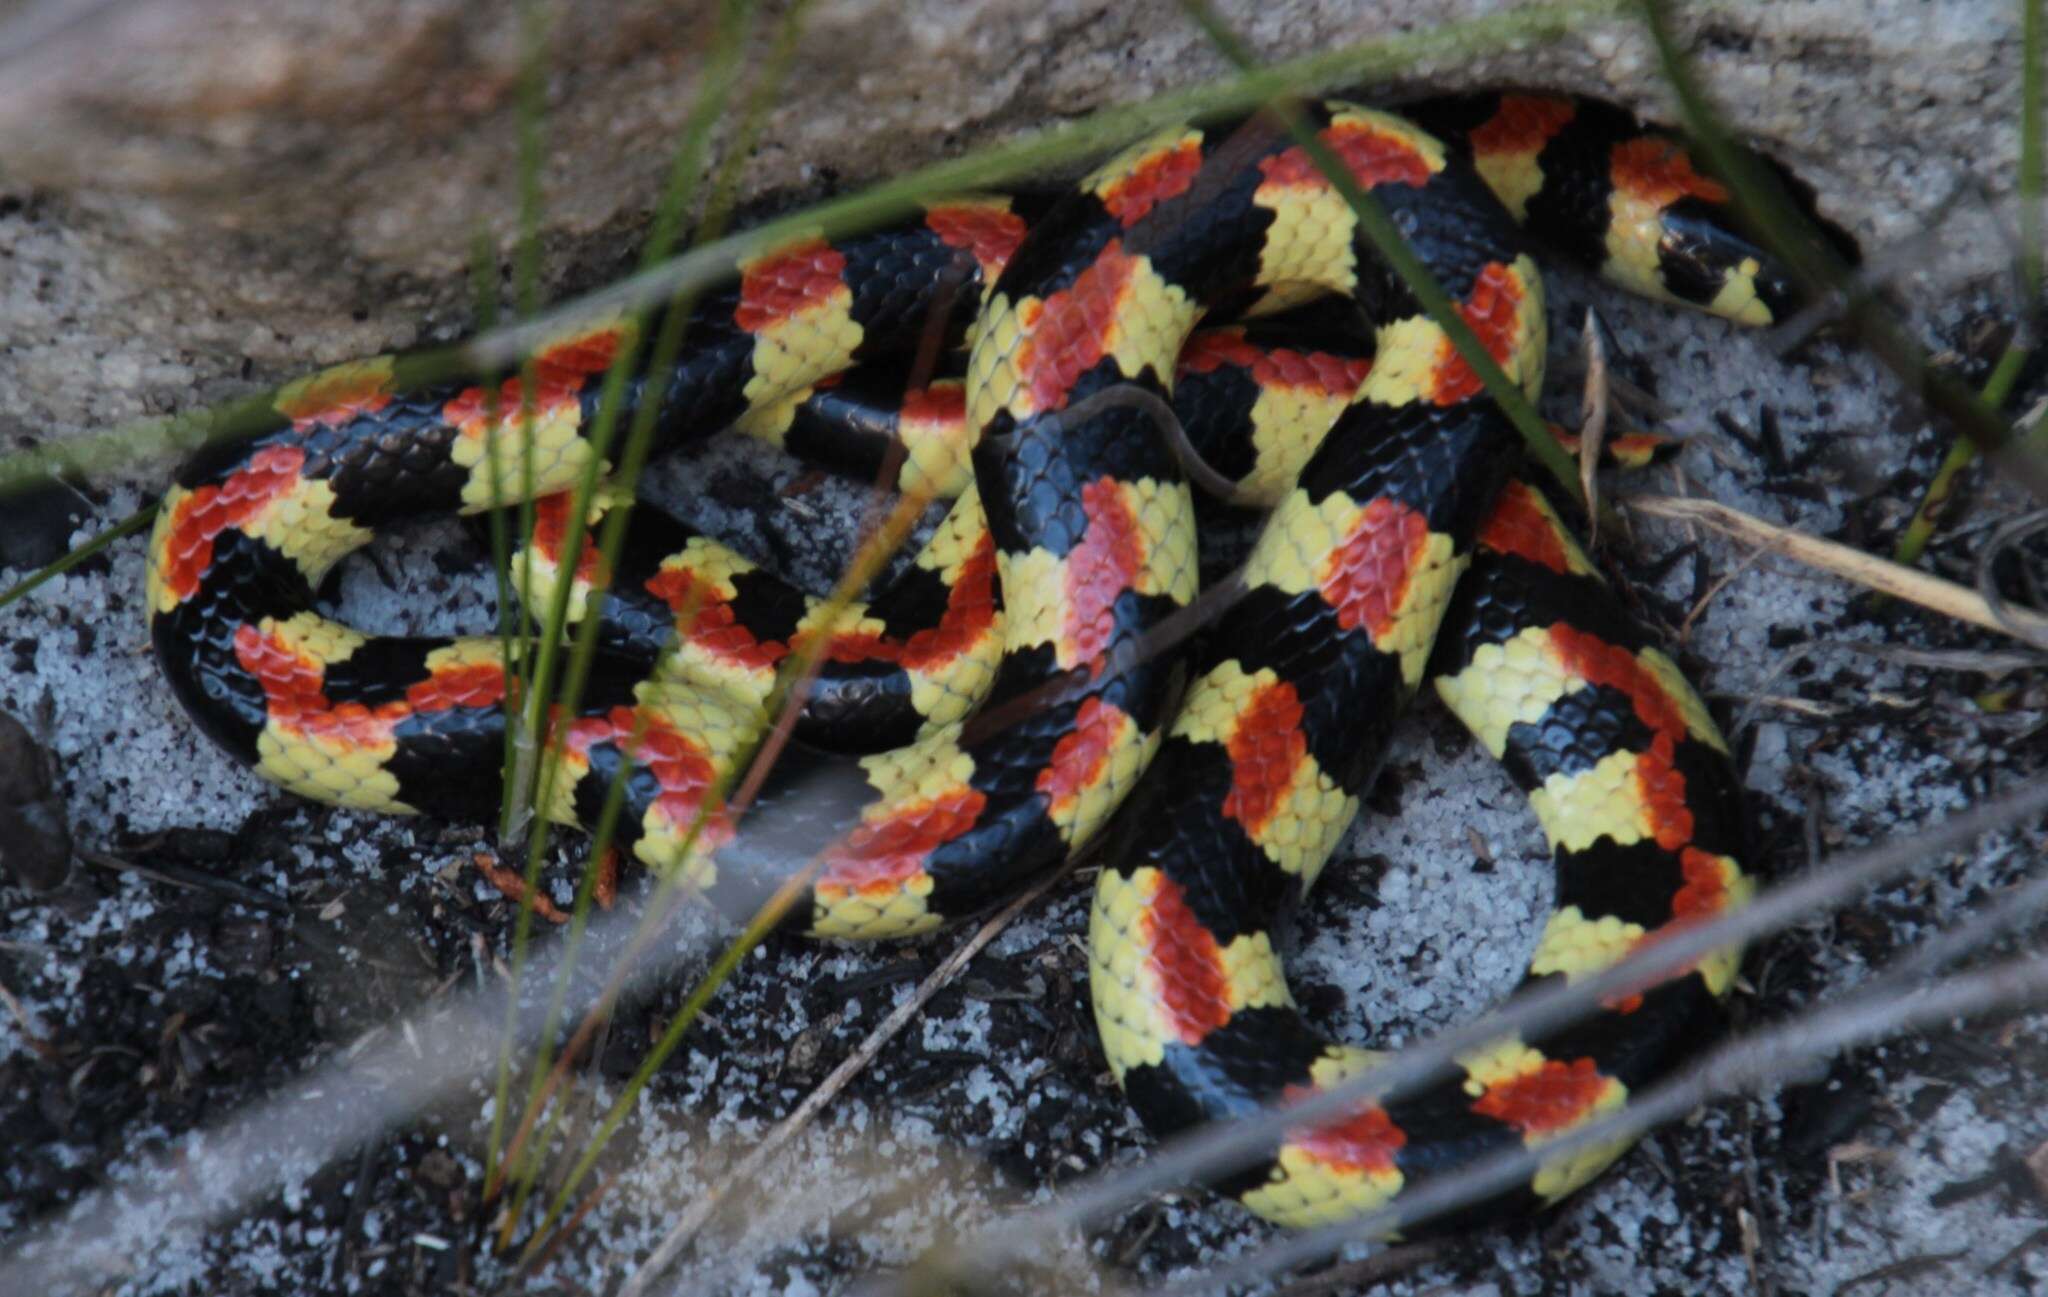 Image of Spotted Harlequin snake